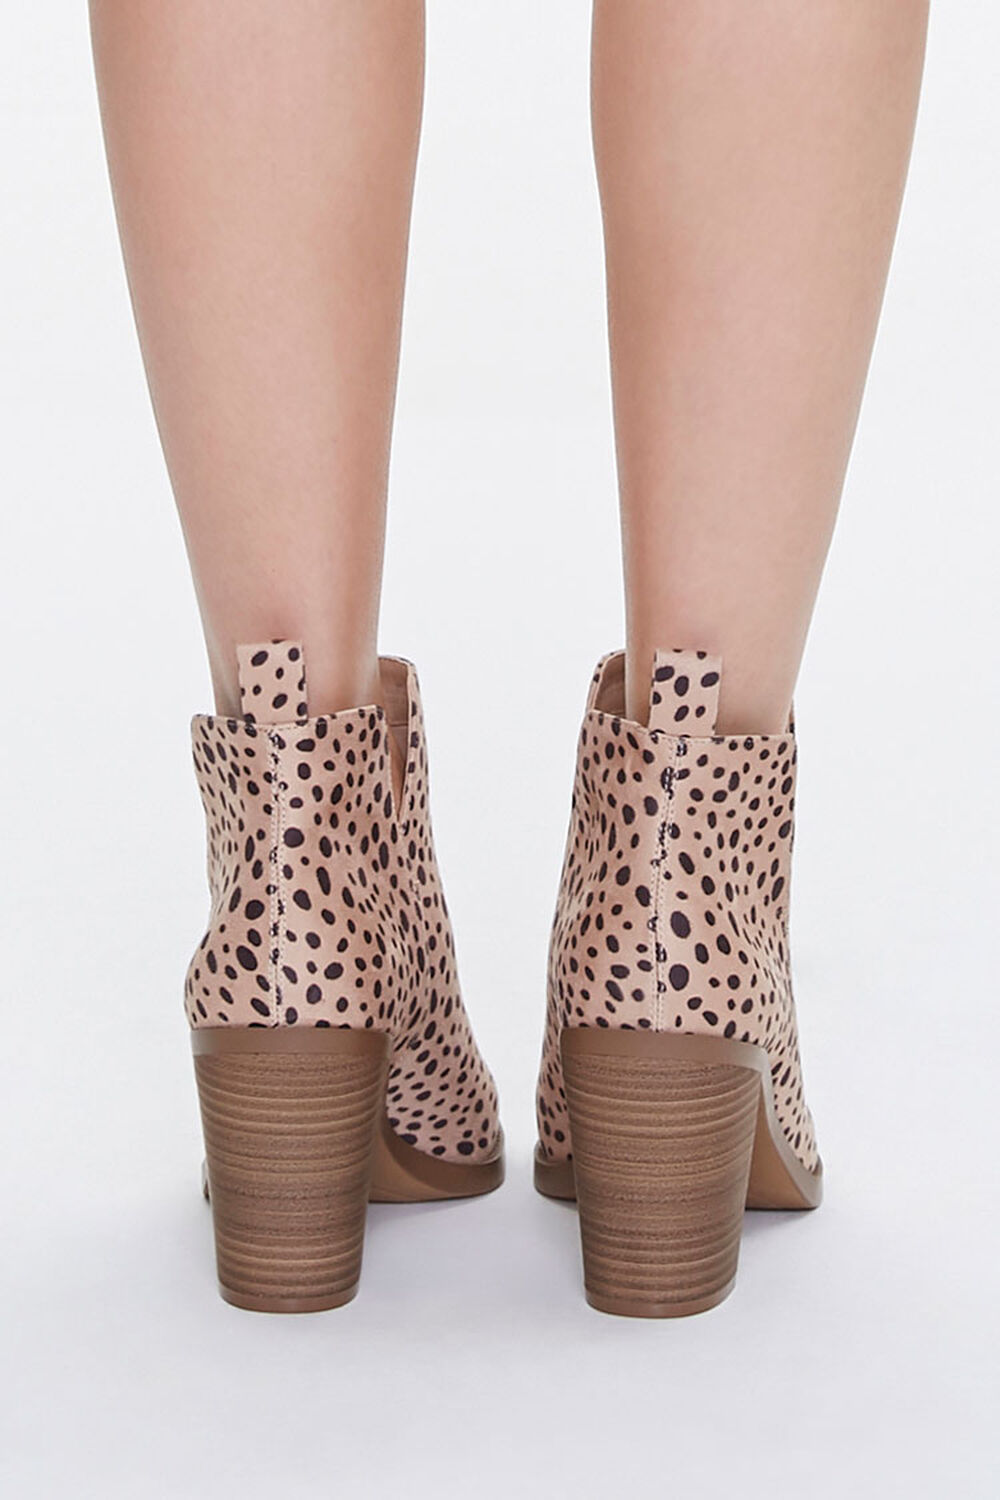 TAN/MULTI Cheetah Stacked Heel Booties, image 3